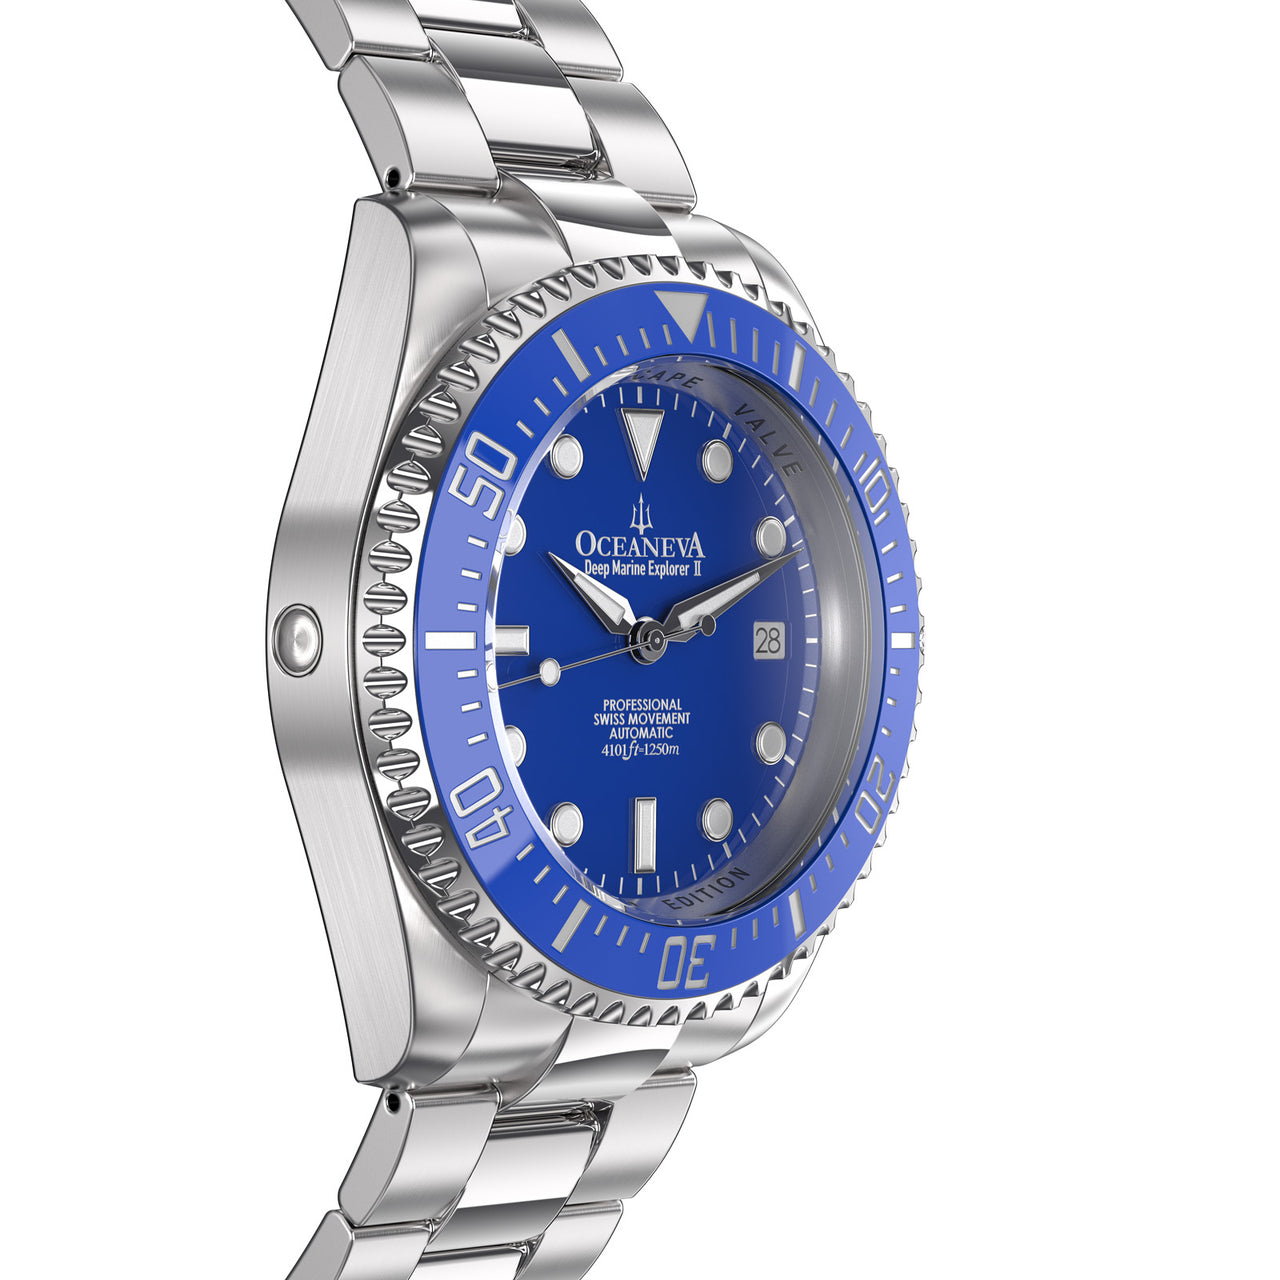 Original gas escape valve | Rolex, Rolex watches, Rolex oyster perpetual